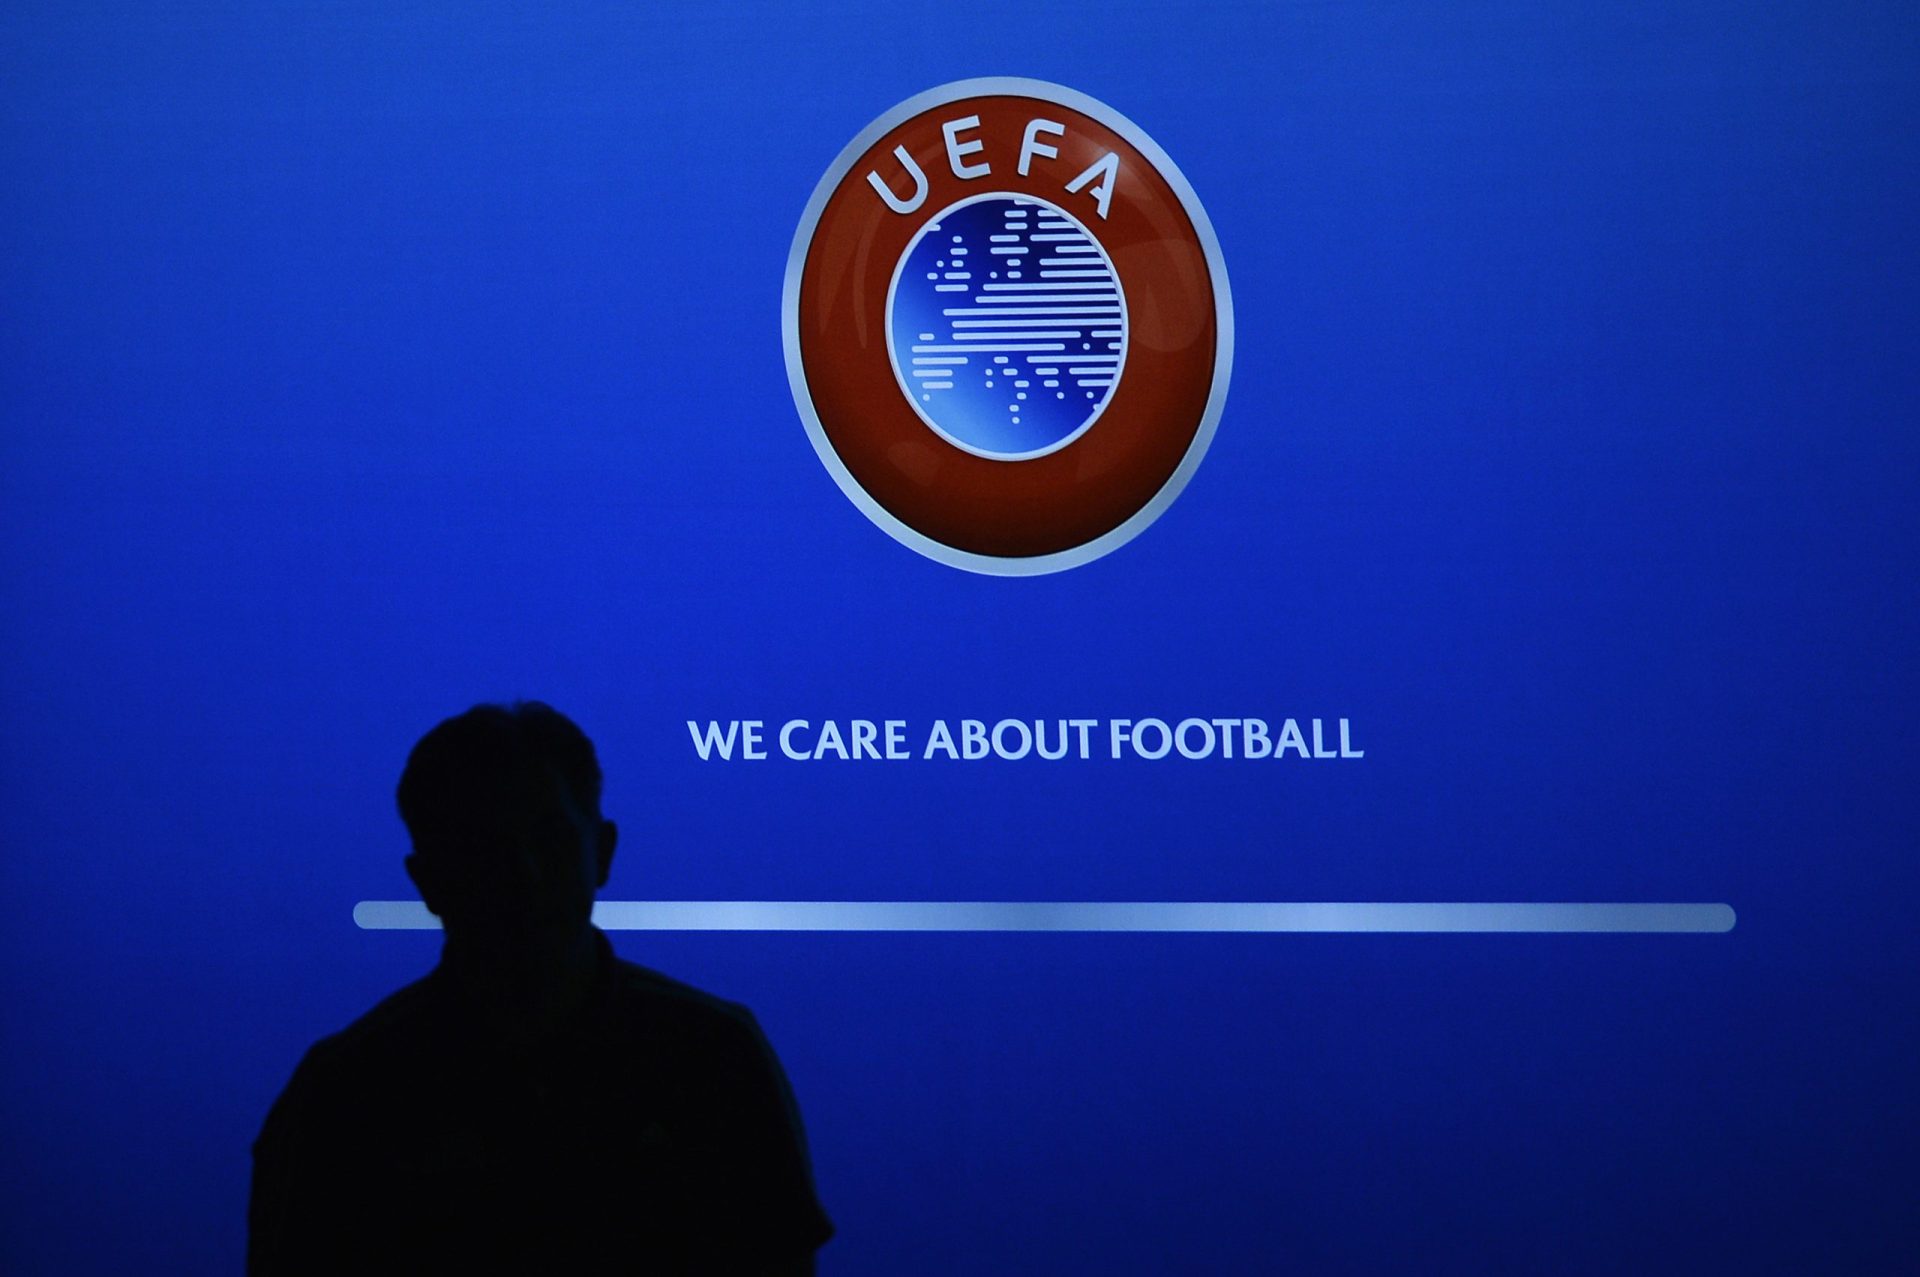 Oito cidades anfitriãs do Euro 2020 vão receber adeptos nos estádios, anuncia UEFA